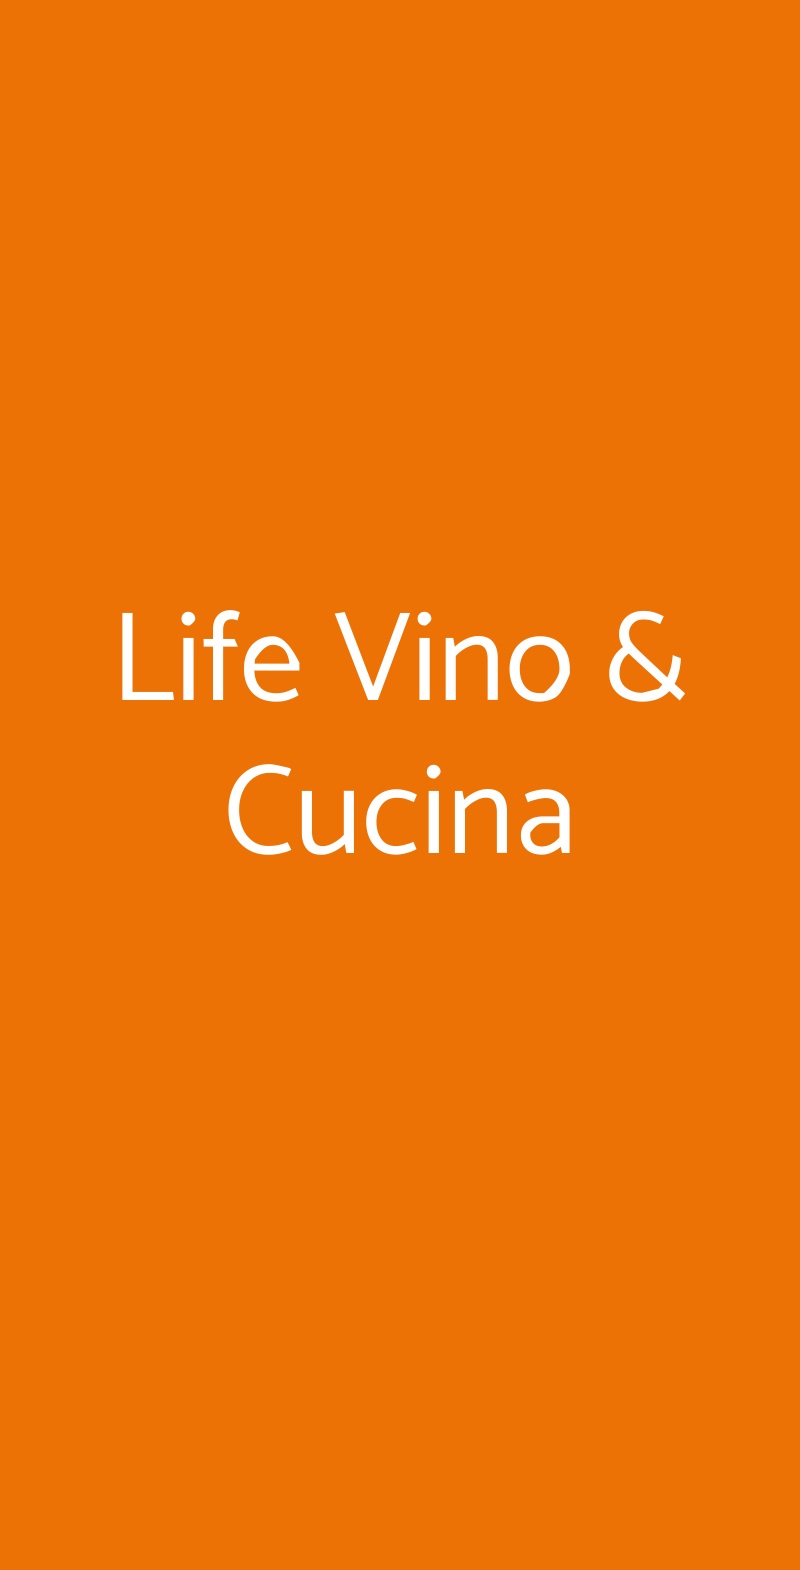 Life Vino & Cucina Milano menù 1 pagina